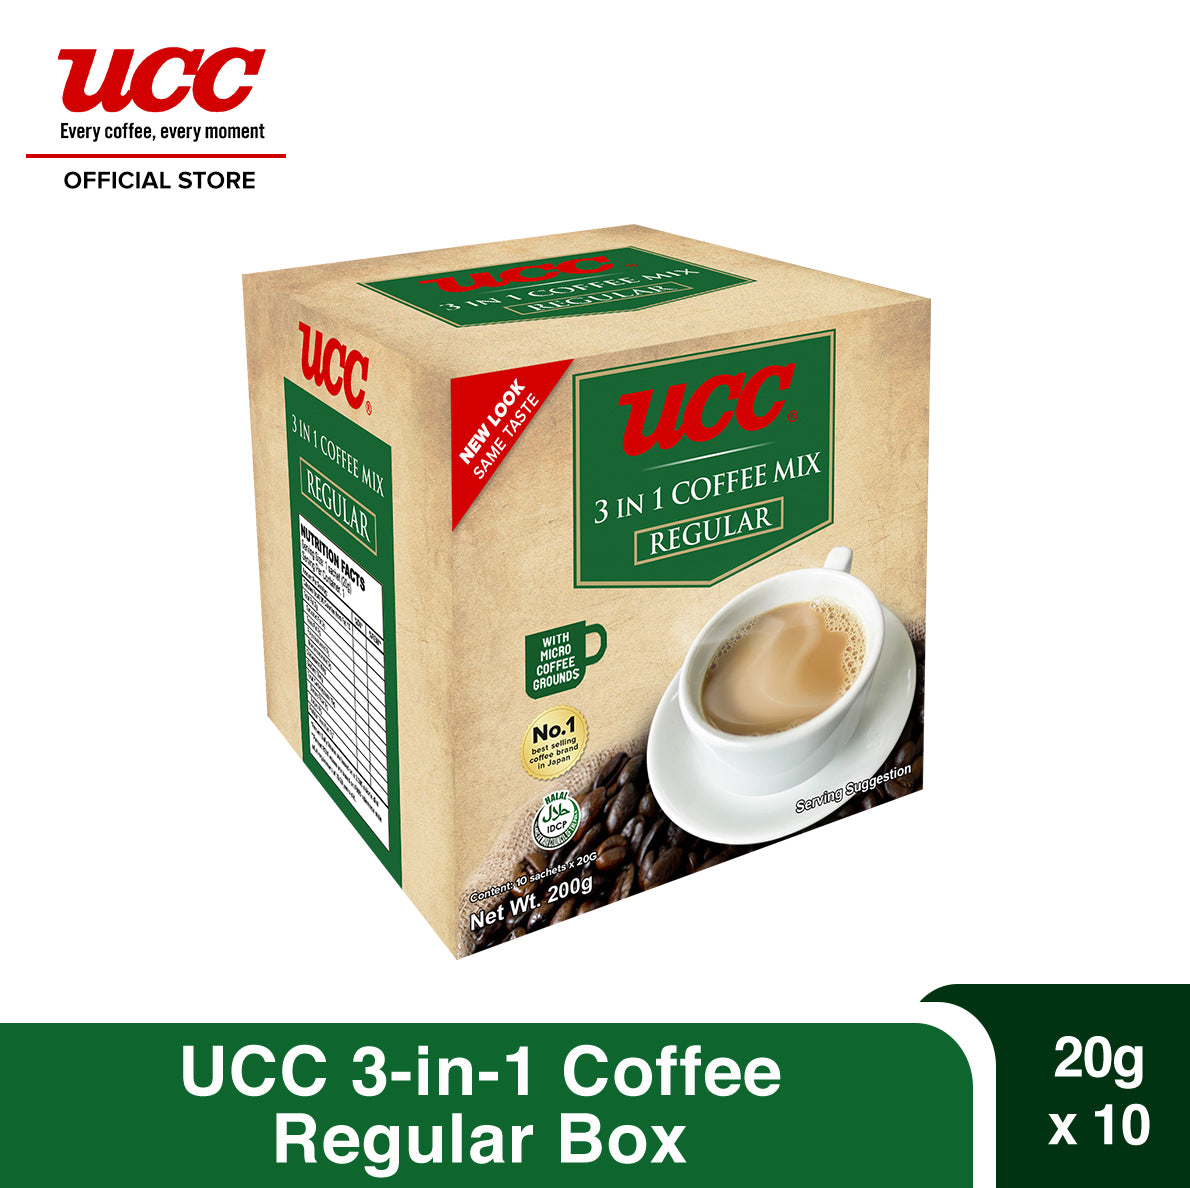 UCC 3-in-1 Coffee Regular Box (20g x 10)